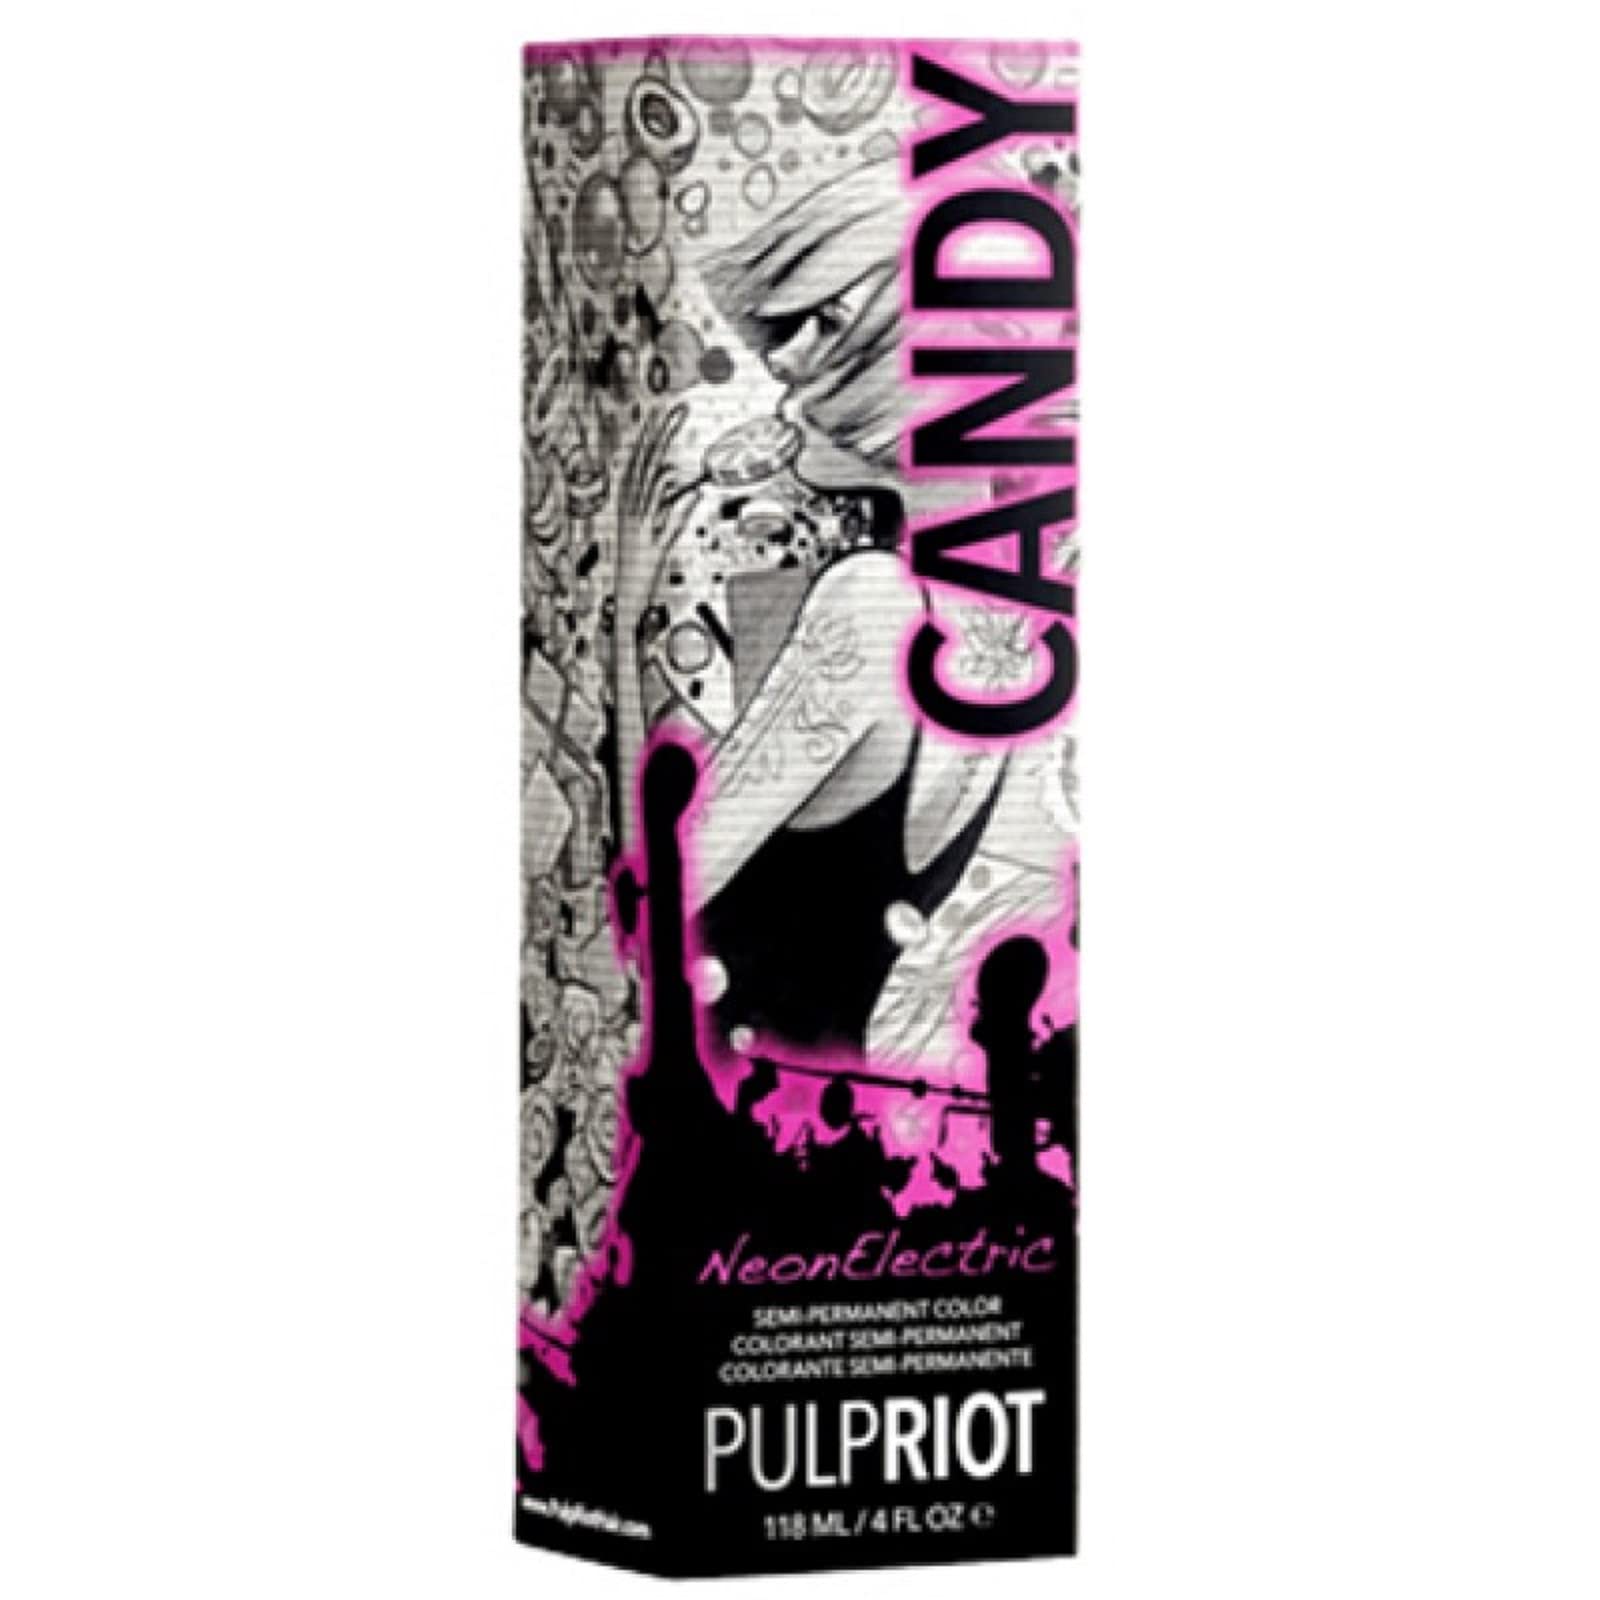 Mua Pulp Riot Semi Permanent Neon Hair Color 4oz Candy Trên Amazon Mỹ